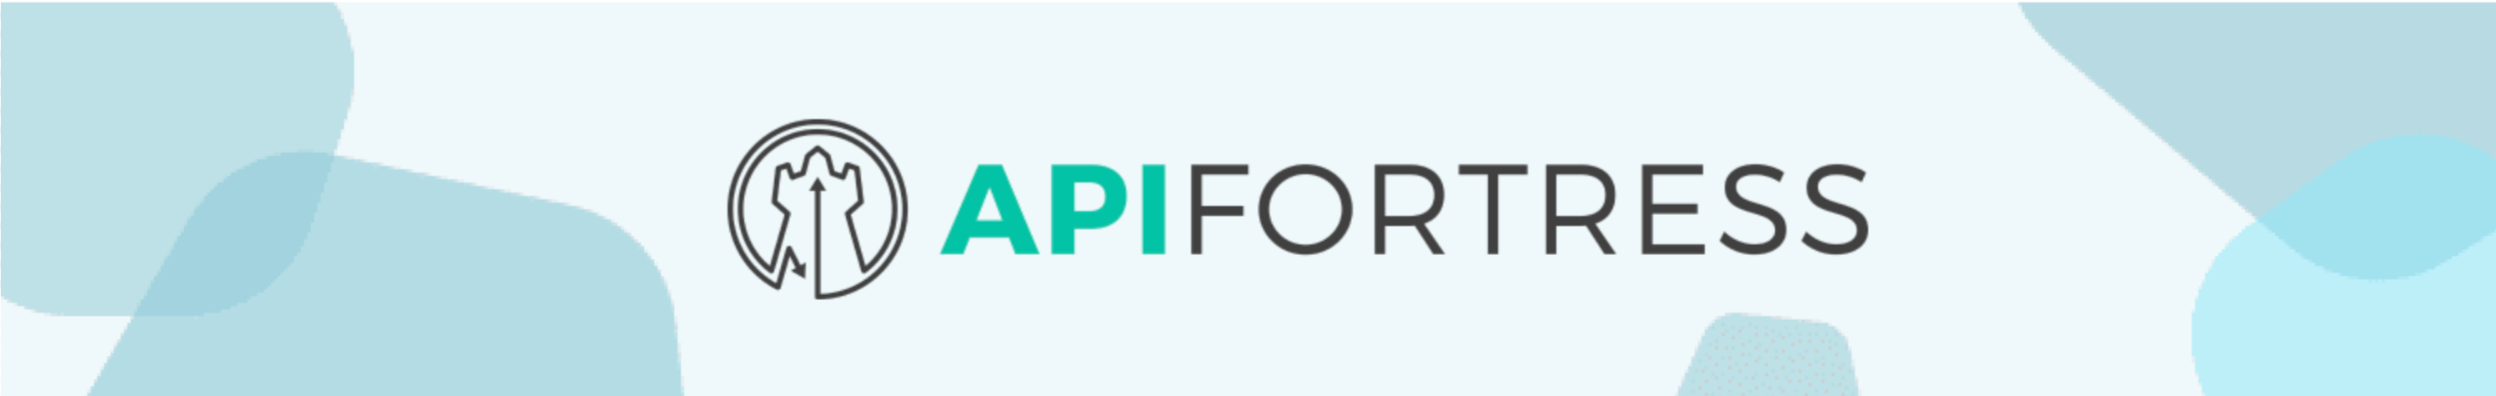 API Fortress.png